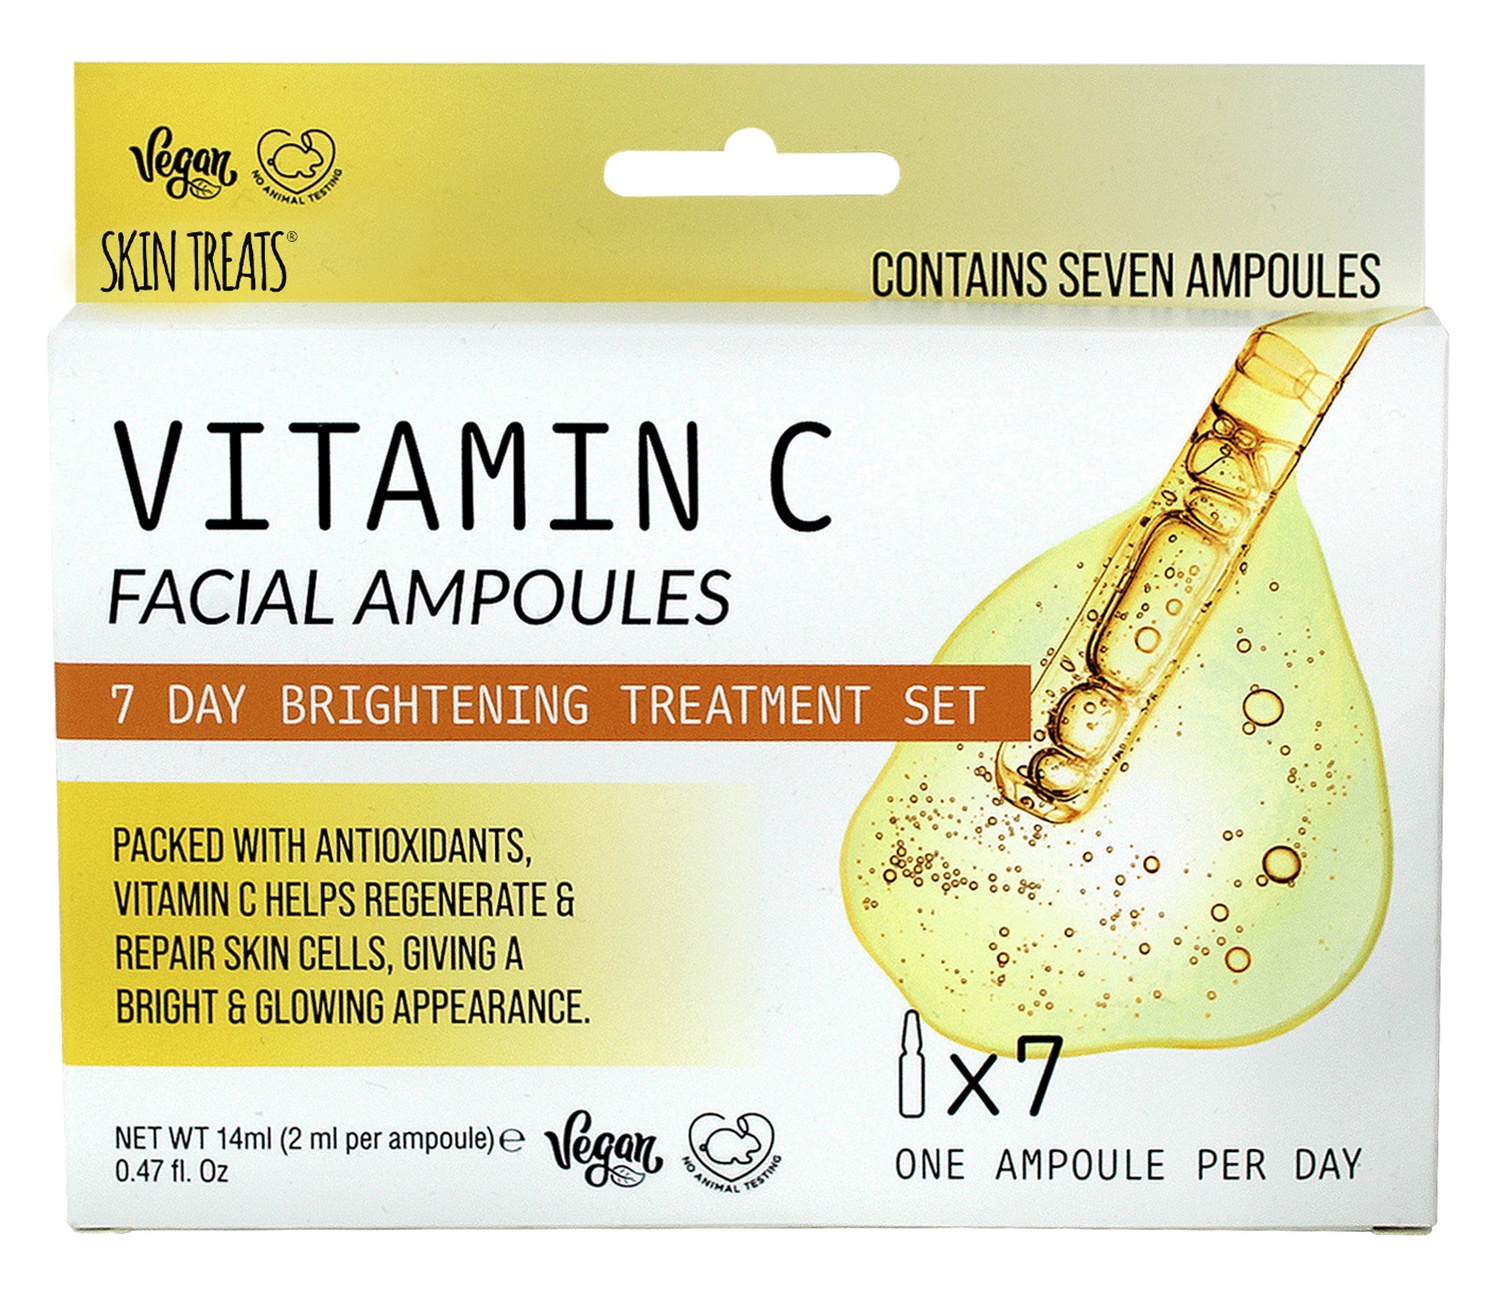 Skin Treats Vitamin C Facial Ampoules - 7 Day Brightening Treatment Set